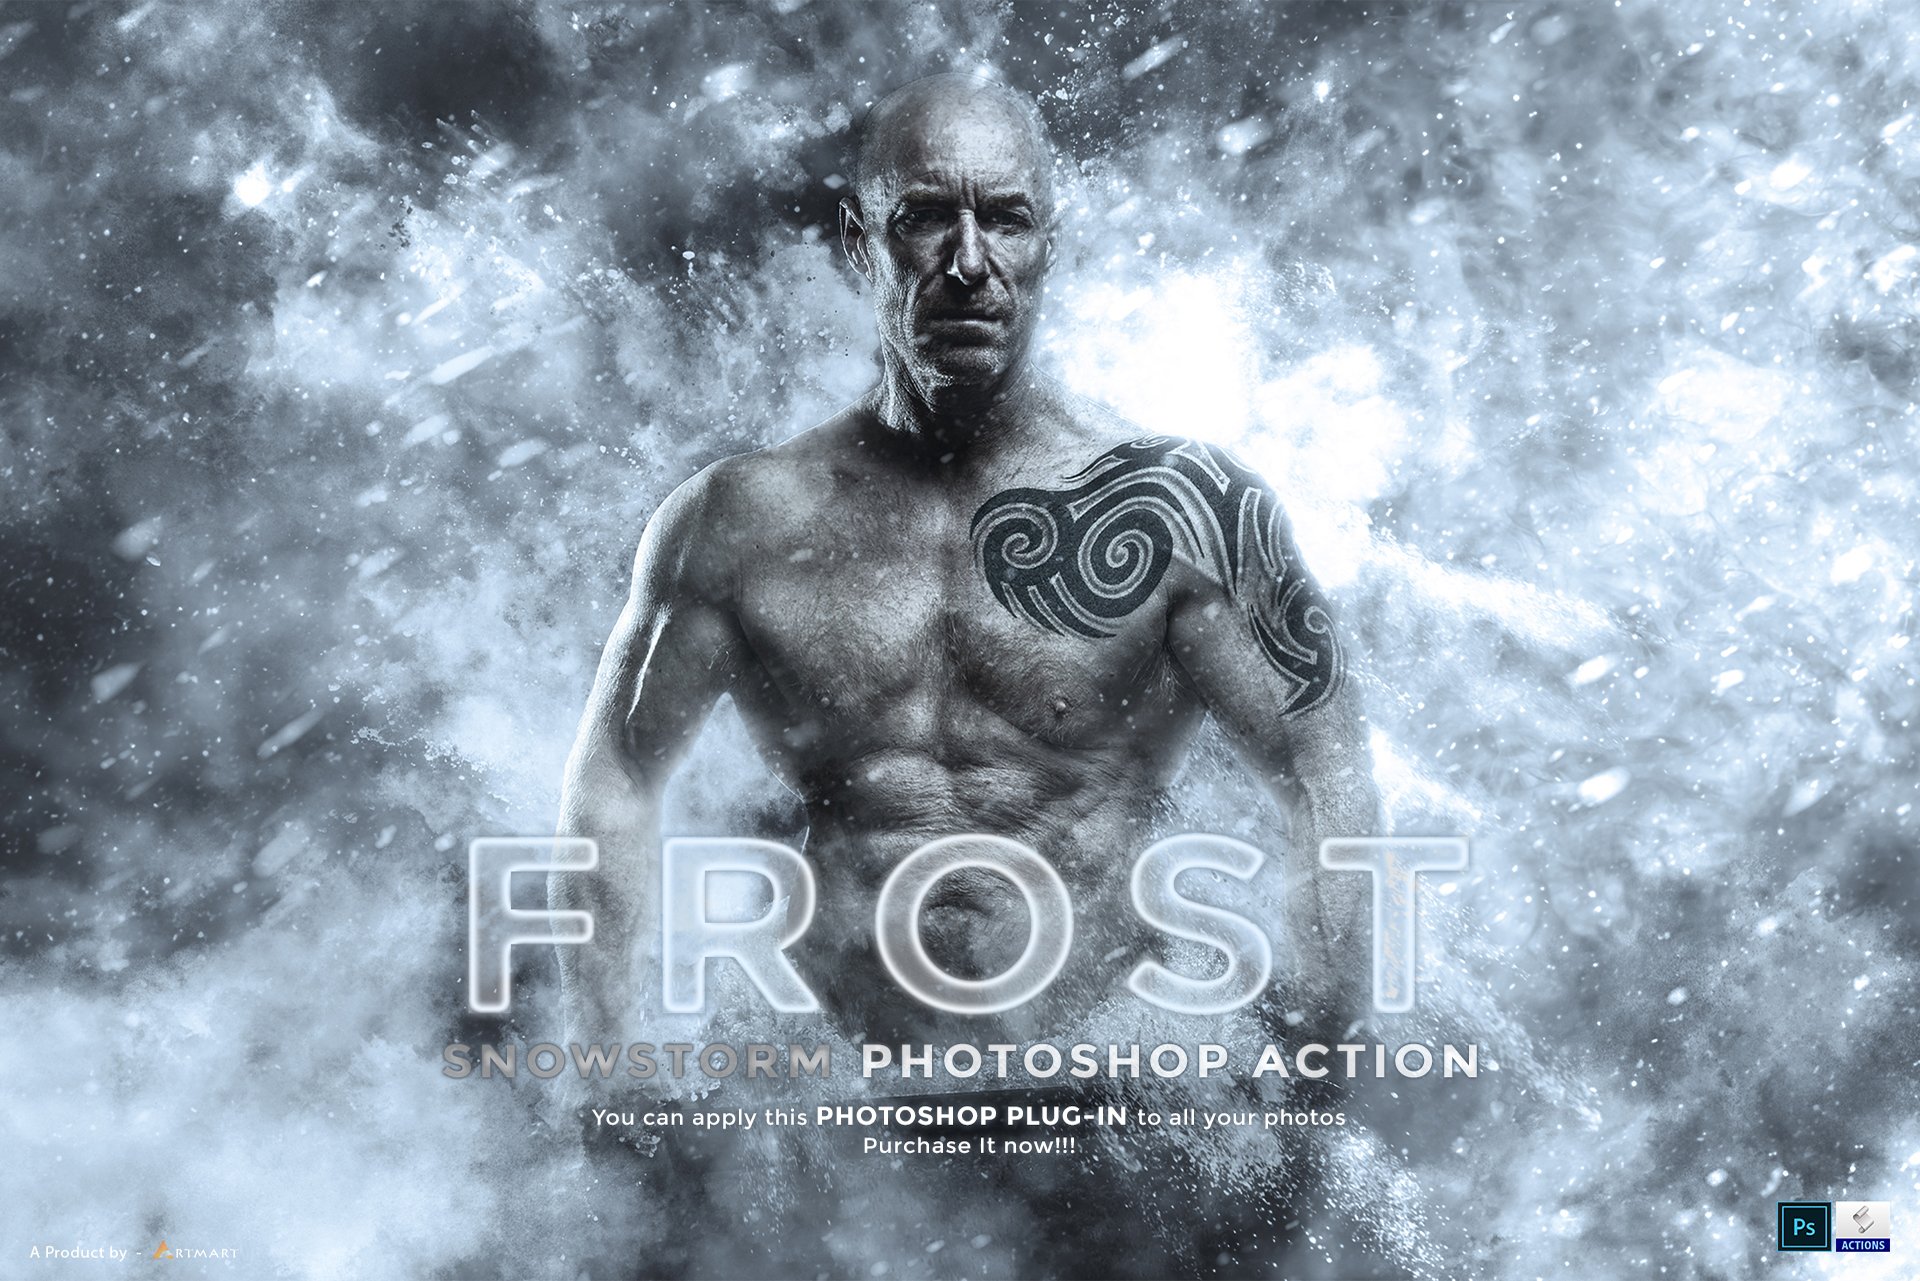 02 frost snowstorm photoshop action 28artmartz29 28129 245